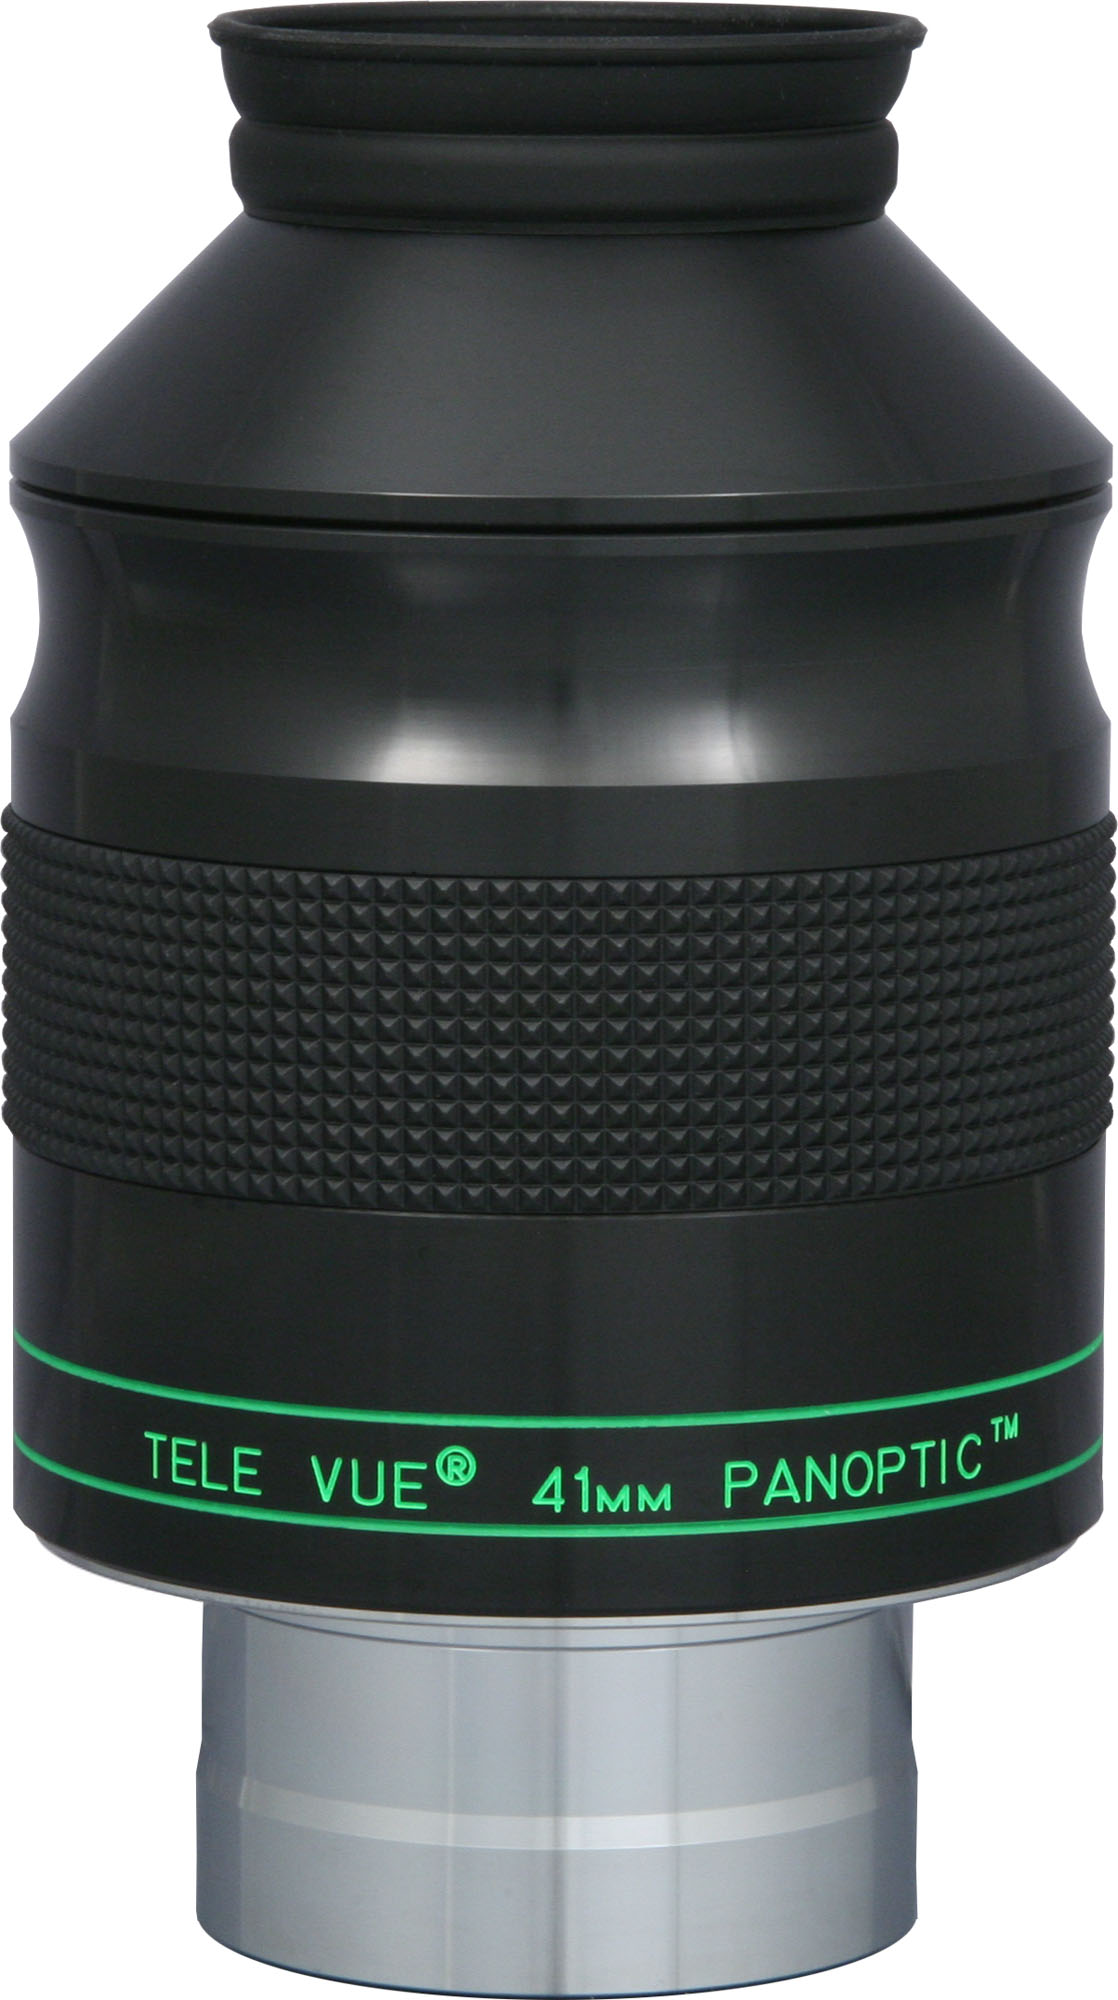 Panoptic 41mm Eyepiece